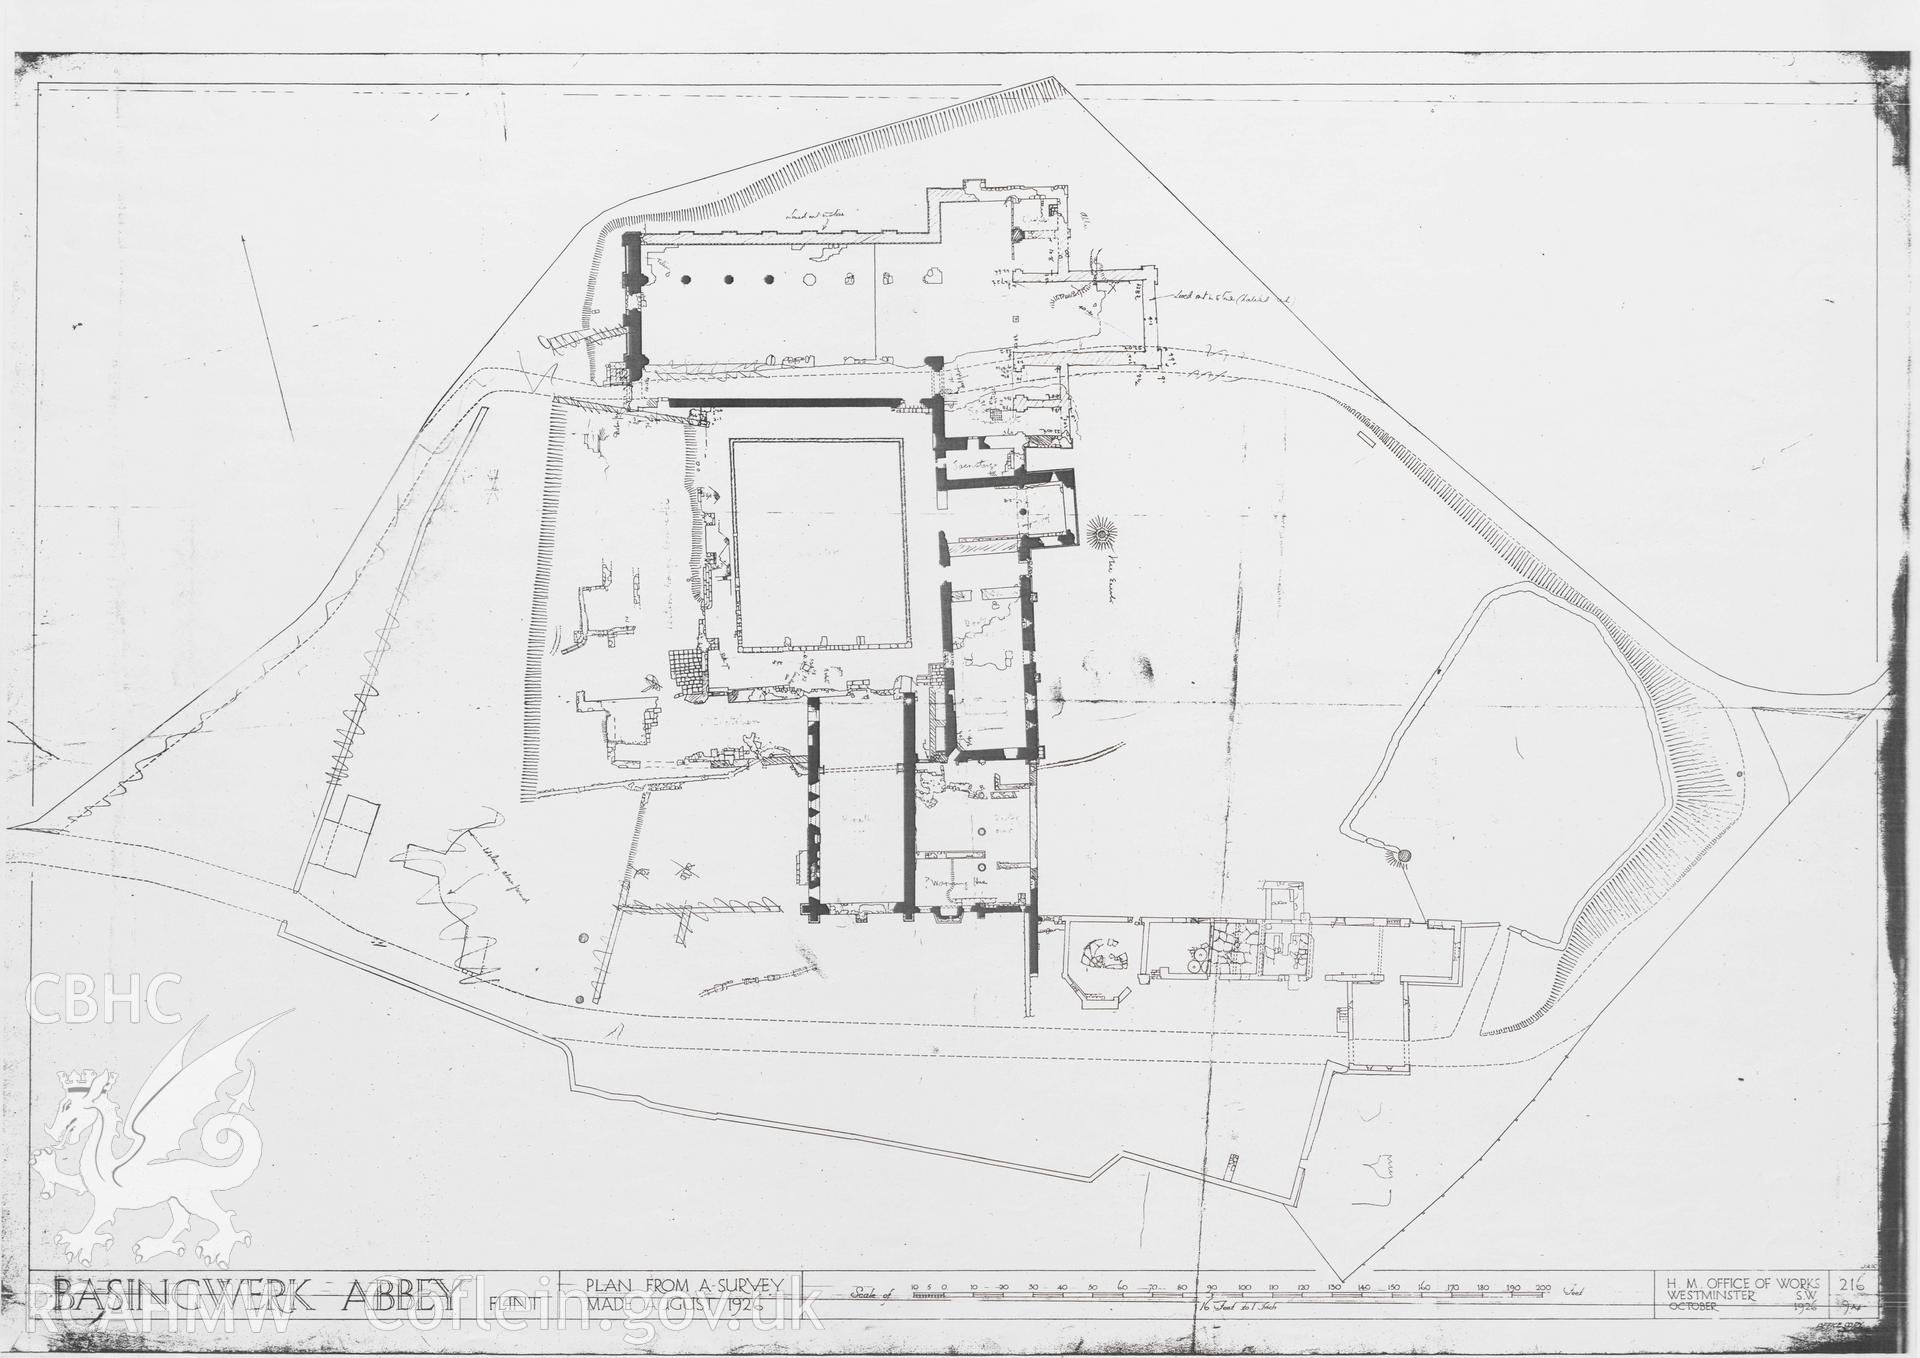 Cadw guardianship monument drawing of Basingwerk Abbey. Survey-plan. Cadw Ref. No. 216/9a4. Scale 1:192.